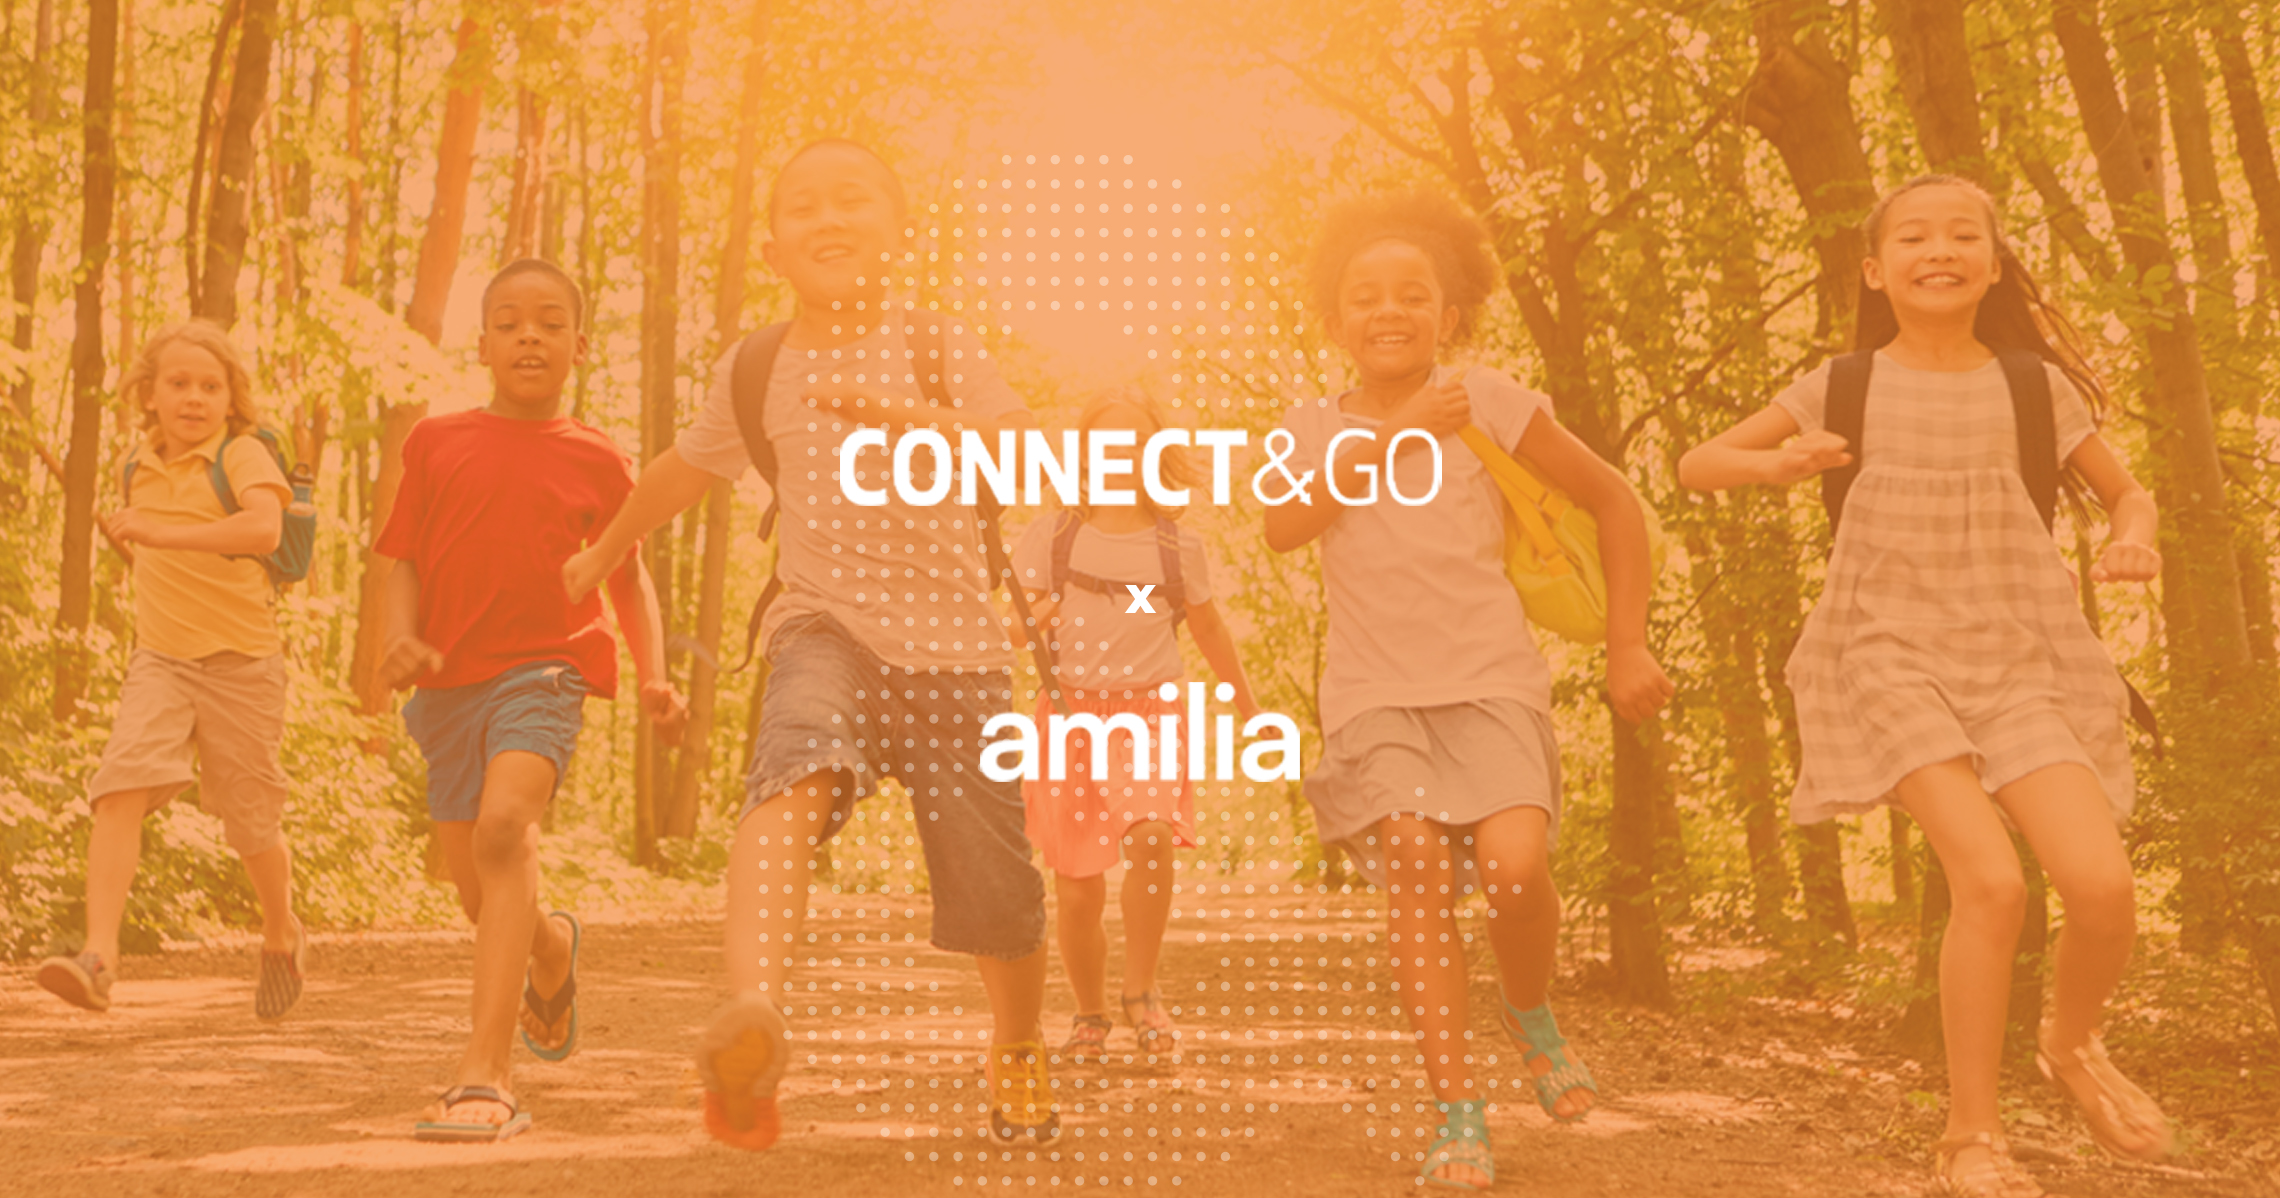 connectngo-partners-with-amilia